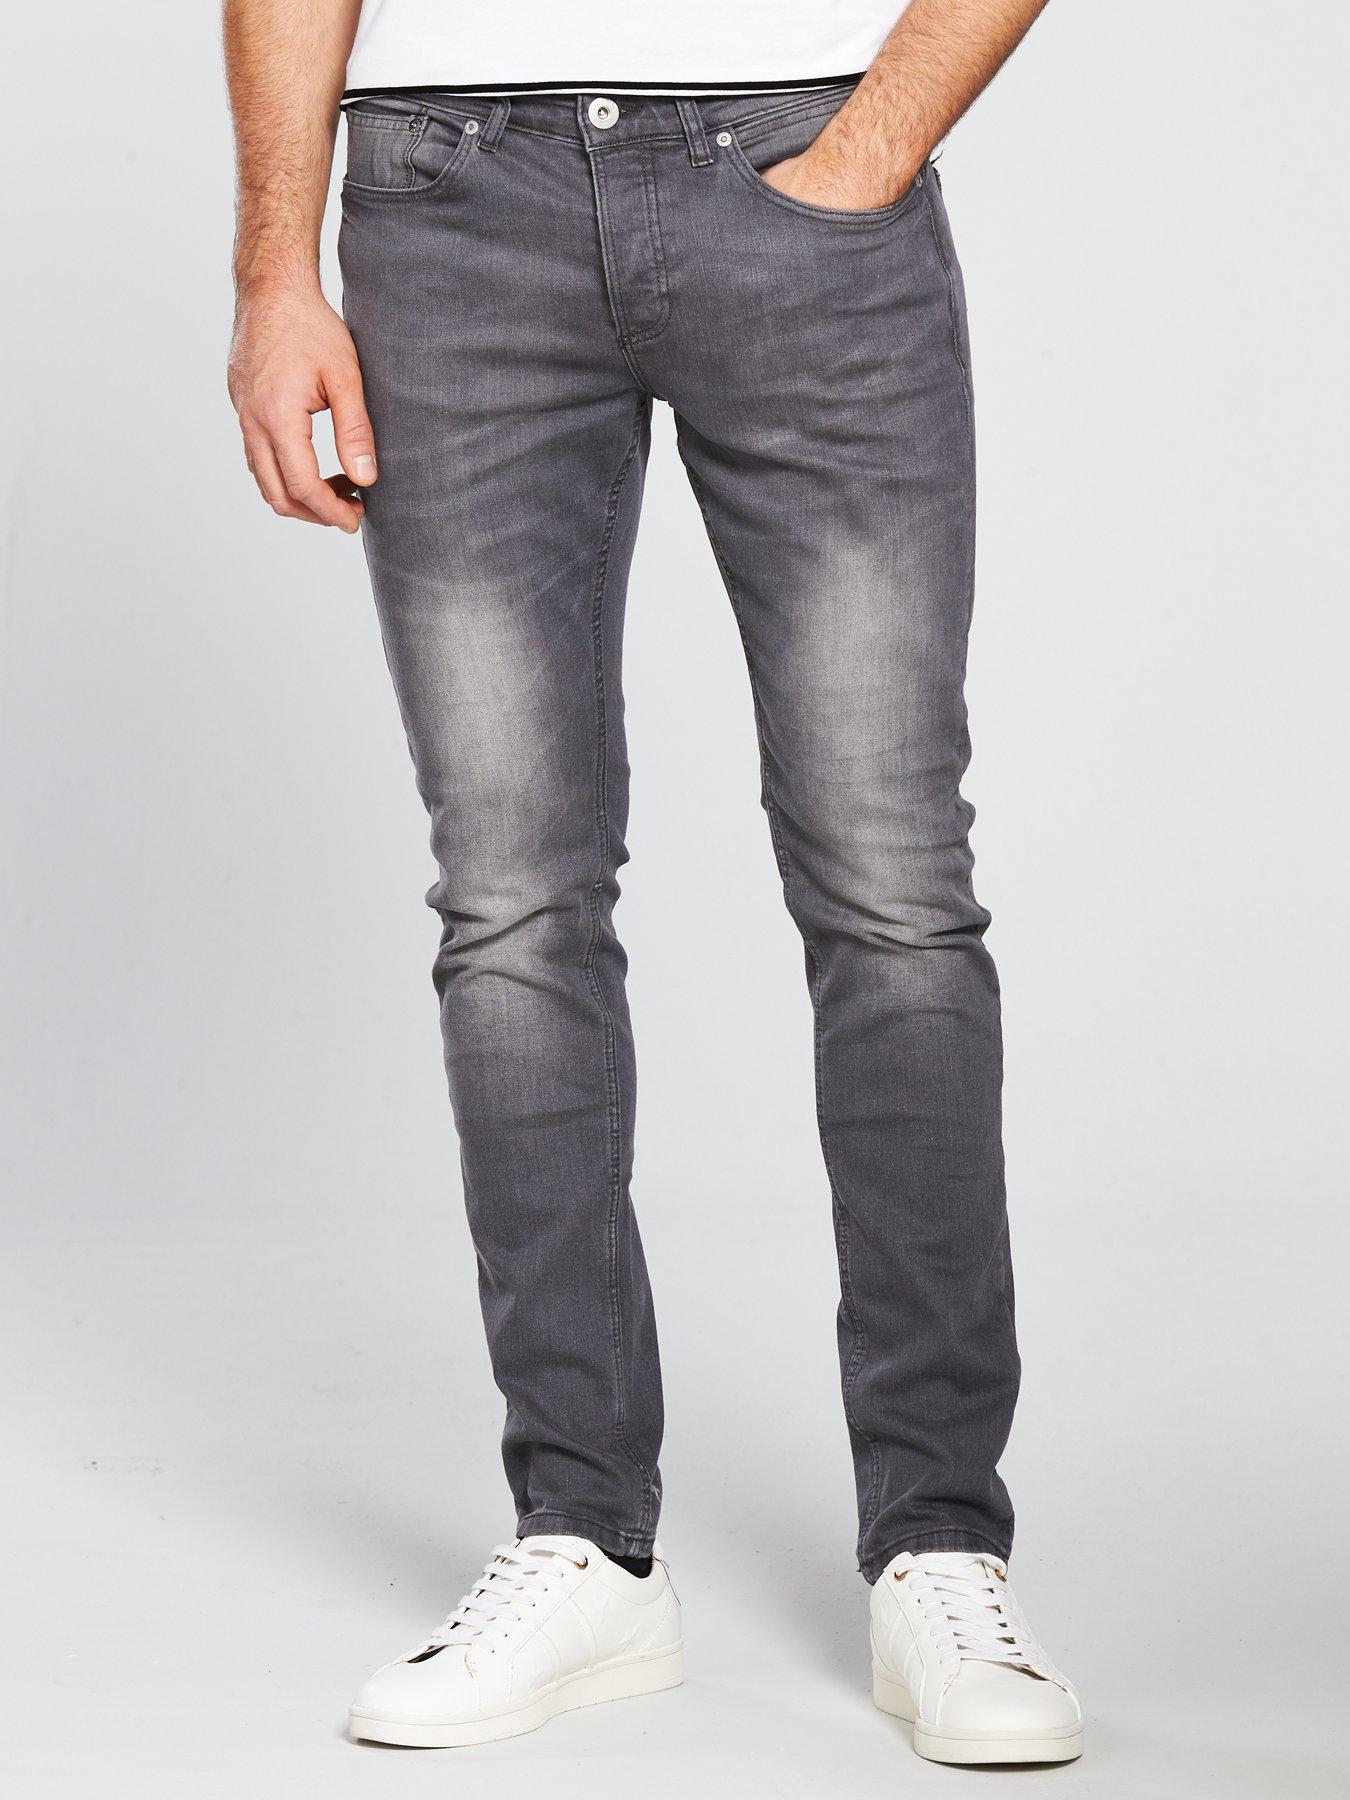 grey river island jeans